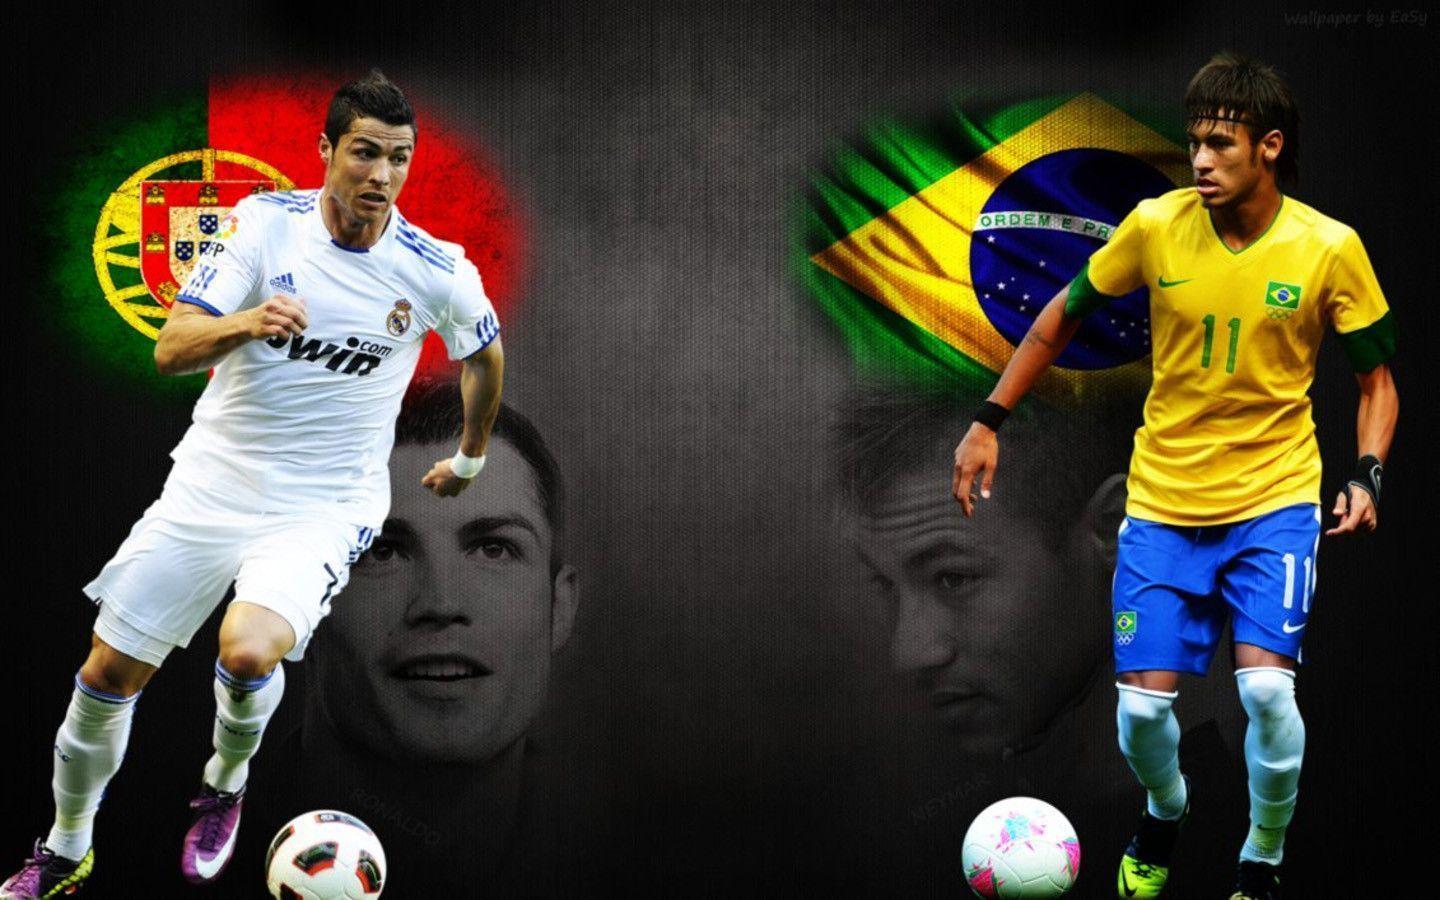 Neymar VS Cristiano Ronaldo high resolution image for desktop